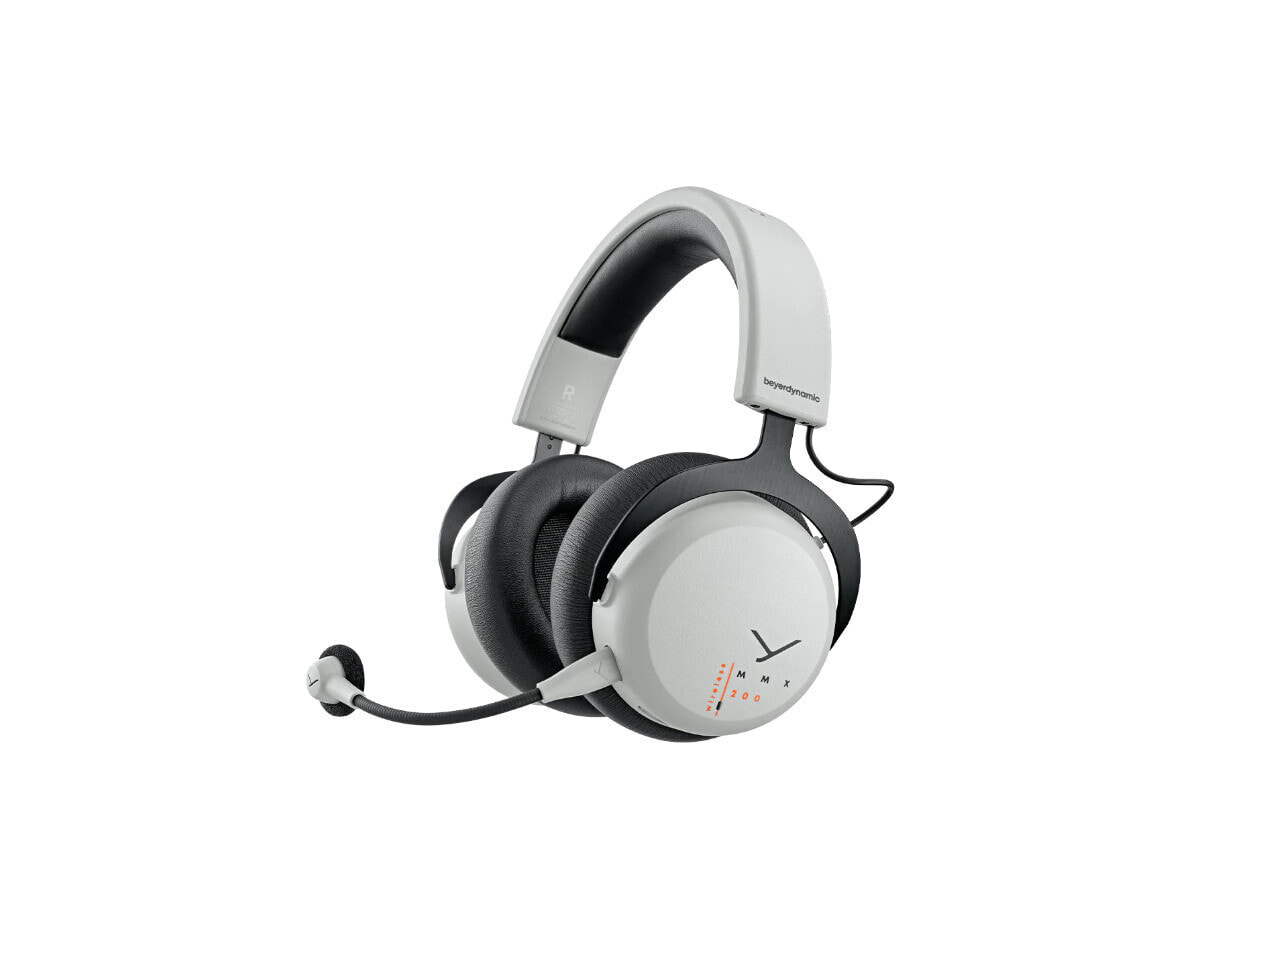 Beyerdynamic MMX 200 Wireless Gaming Headset - Grey